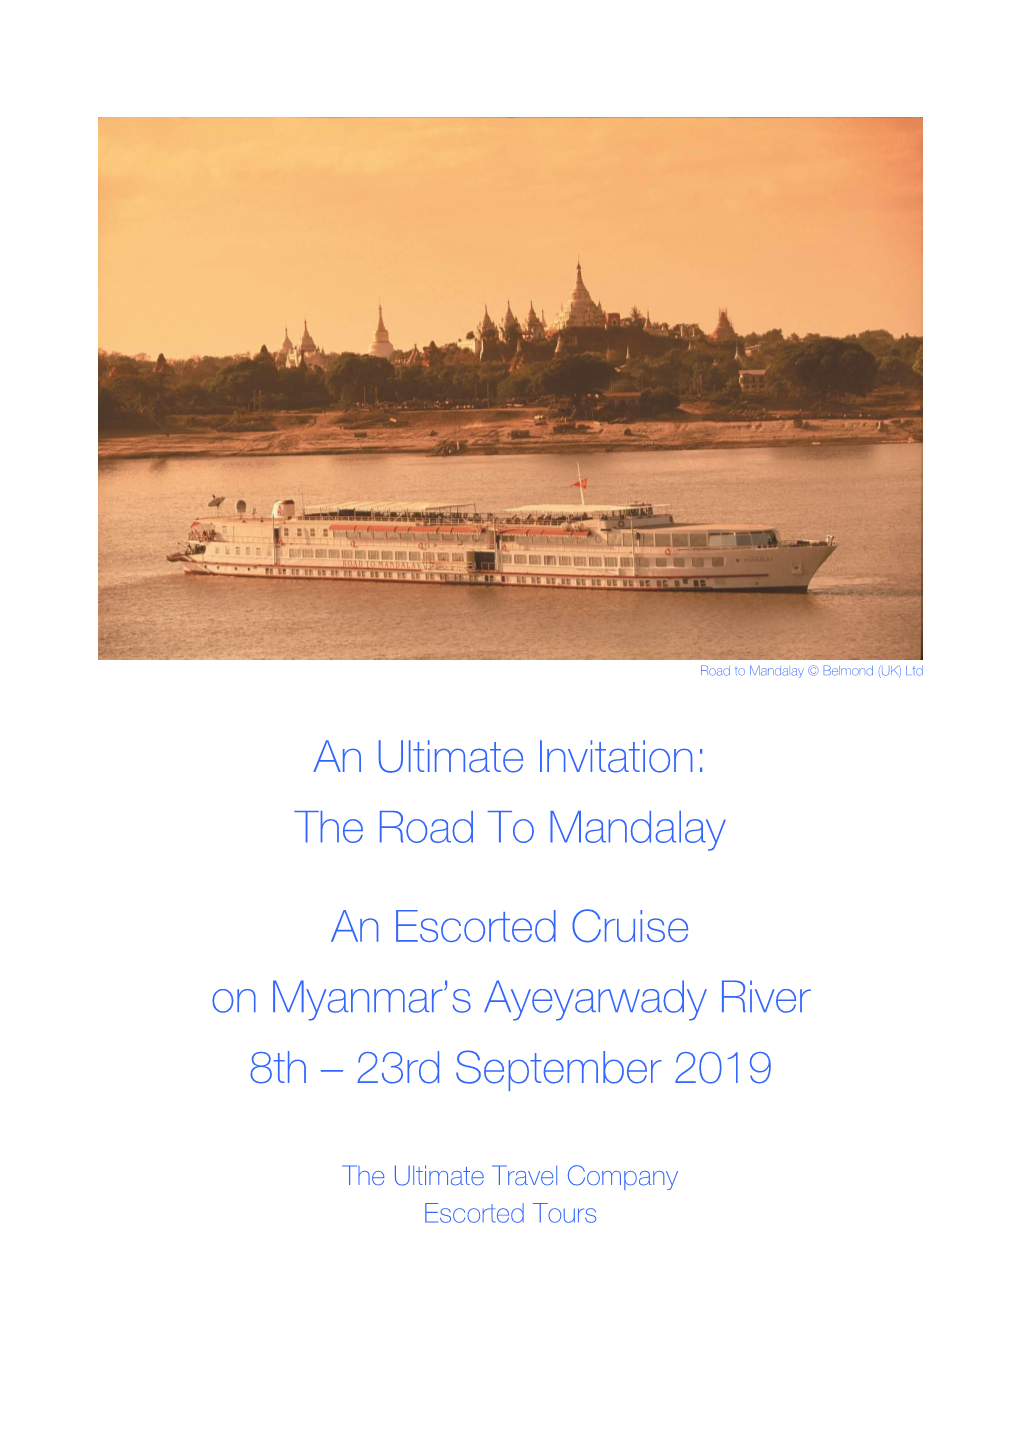 The Road to Mandalay an Escorted Cruise on Myanmar's Ayeyarwady